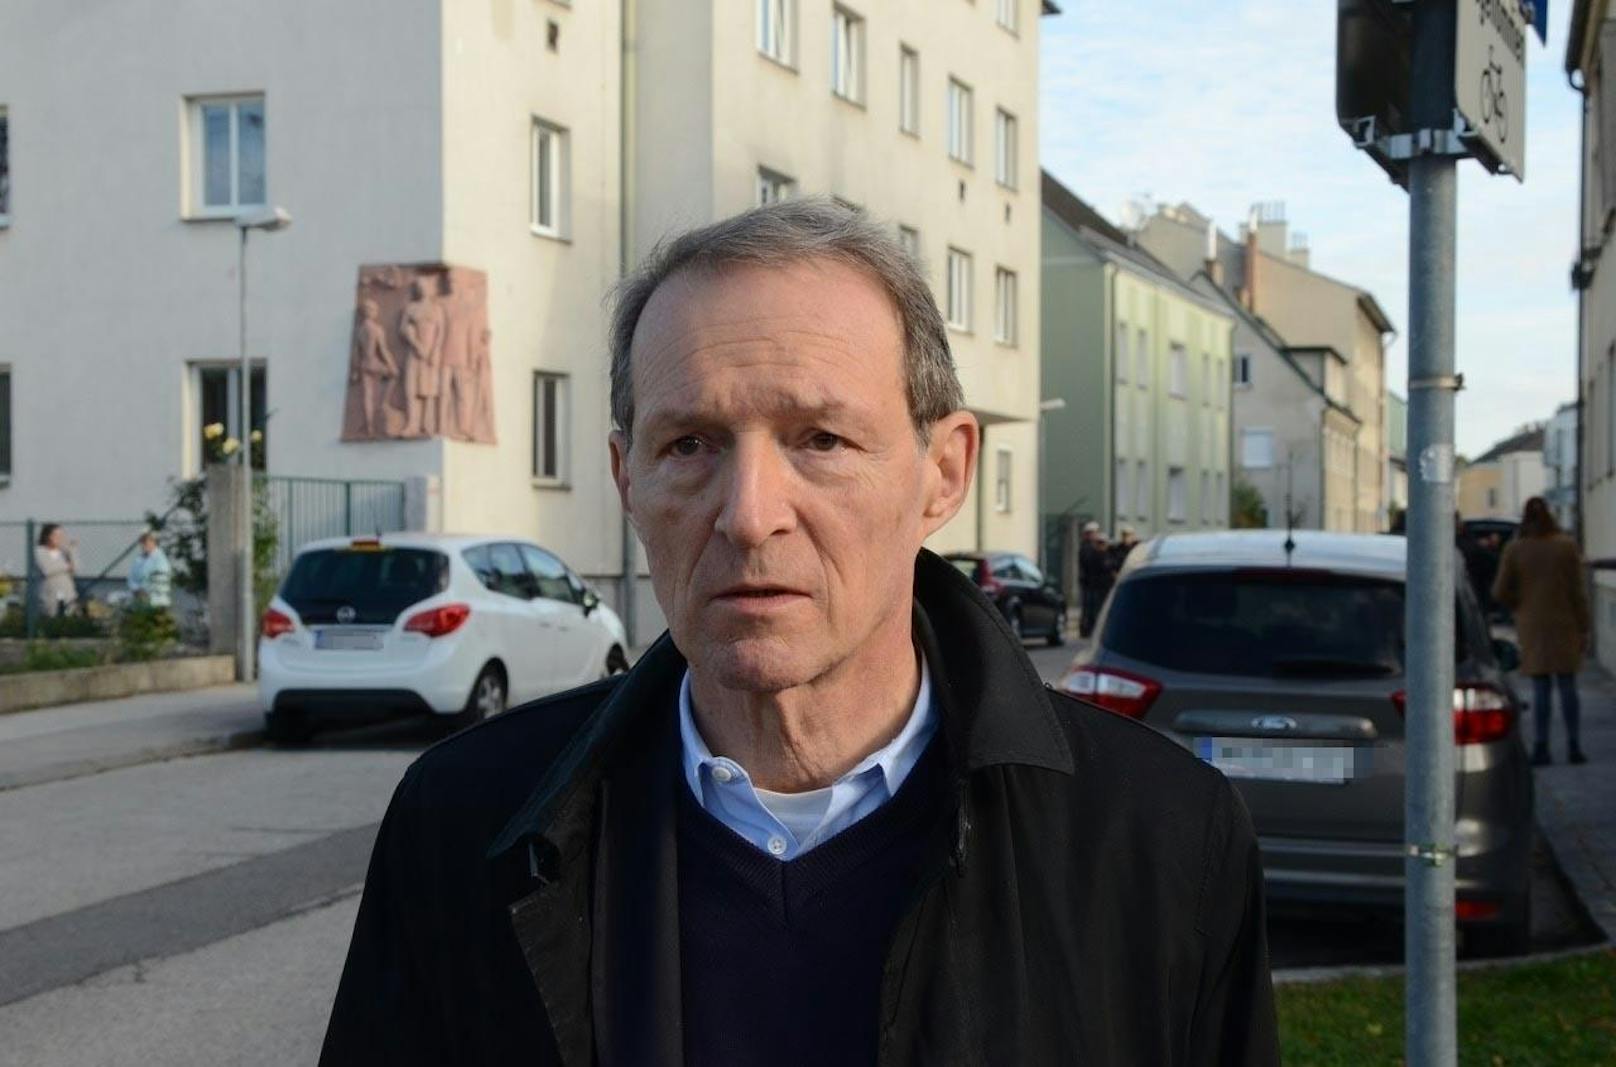 Anwalt Wolfgang Blaschitz bei "Lokalaugenschein"